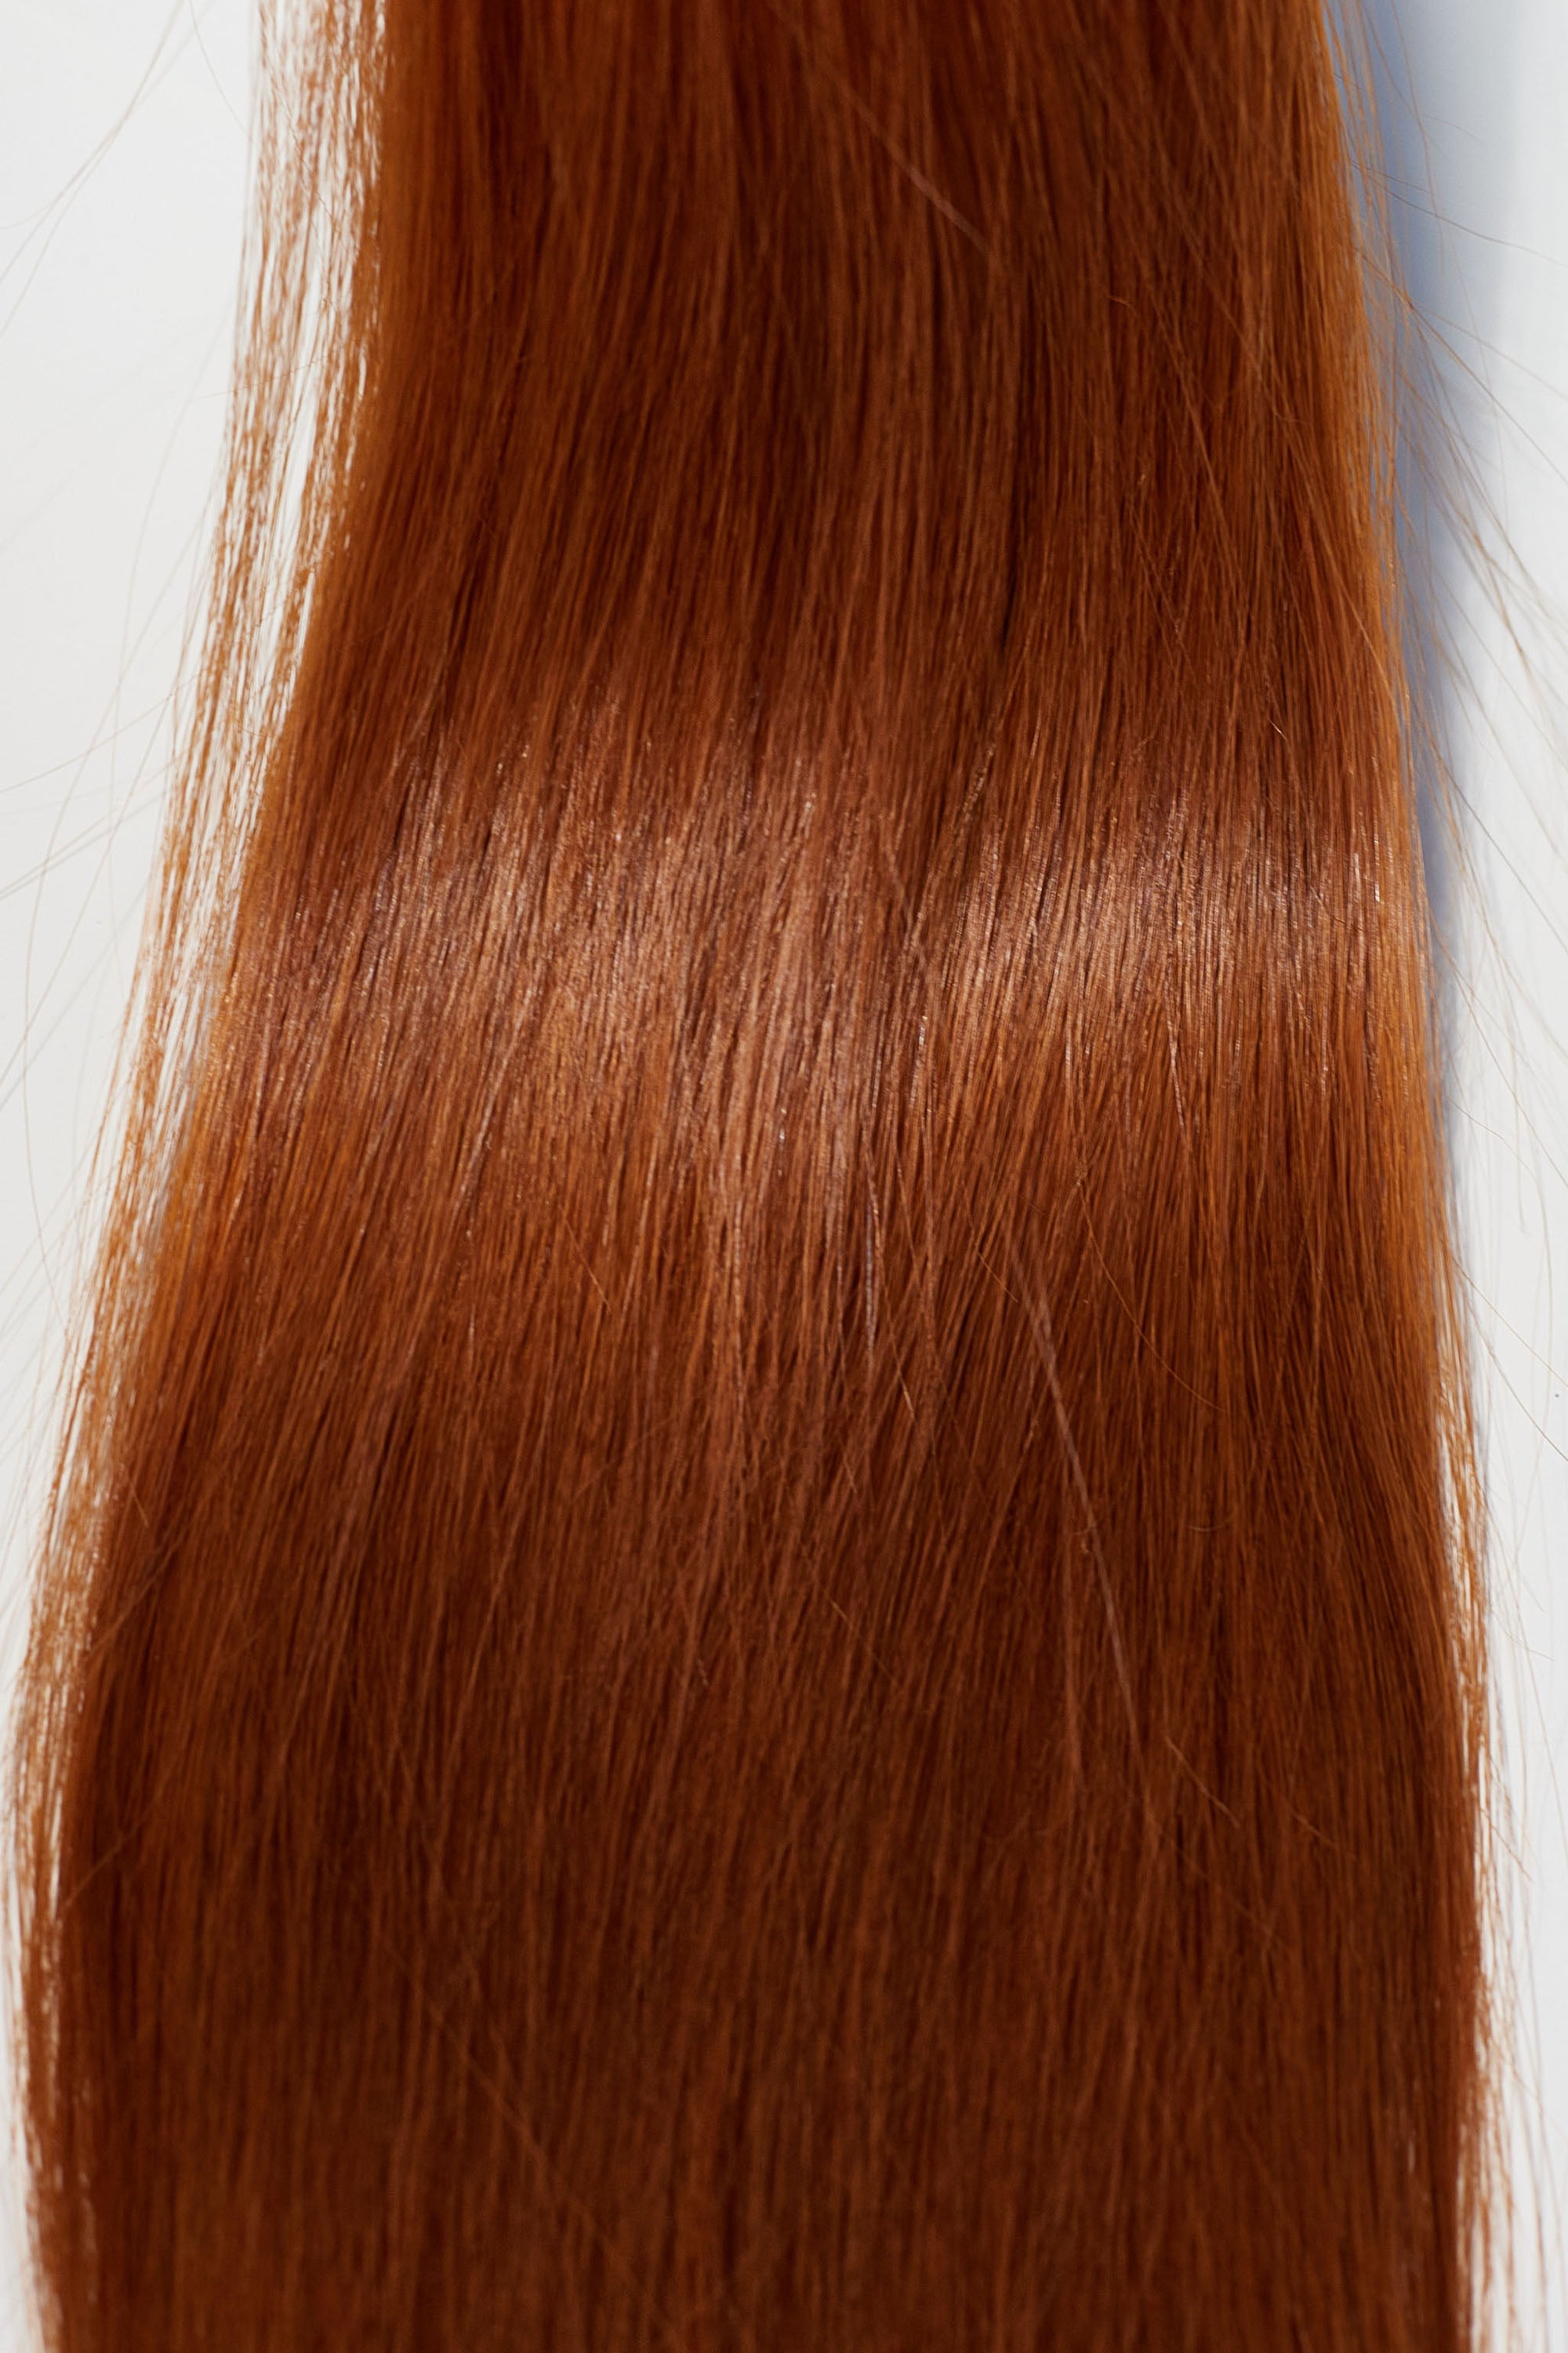 Behair professional Keratin Tip "Premium" 28" (70cm) Natural Straight Brilliant Copper #130 - 25g (Micro - 0.5g each pcs) hair extensions